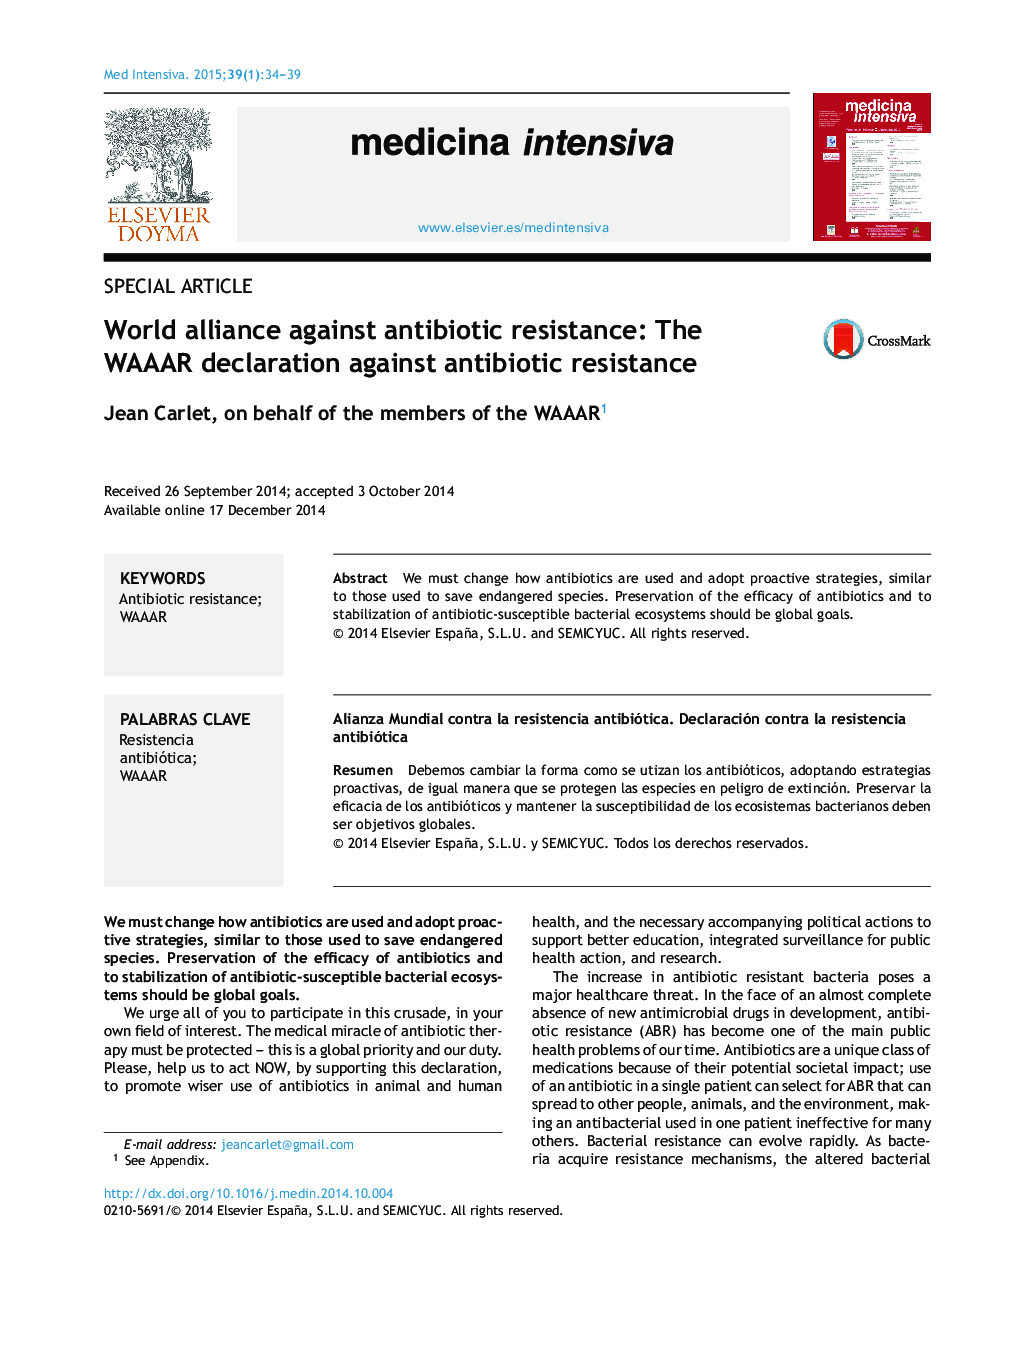 World alliance against antibiotic resistance: The WAAAR declaration against antibiotic resistance